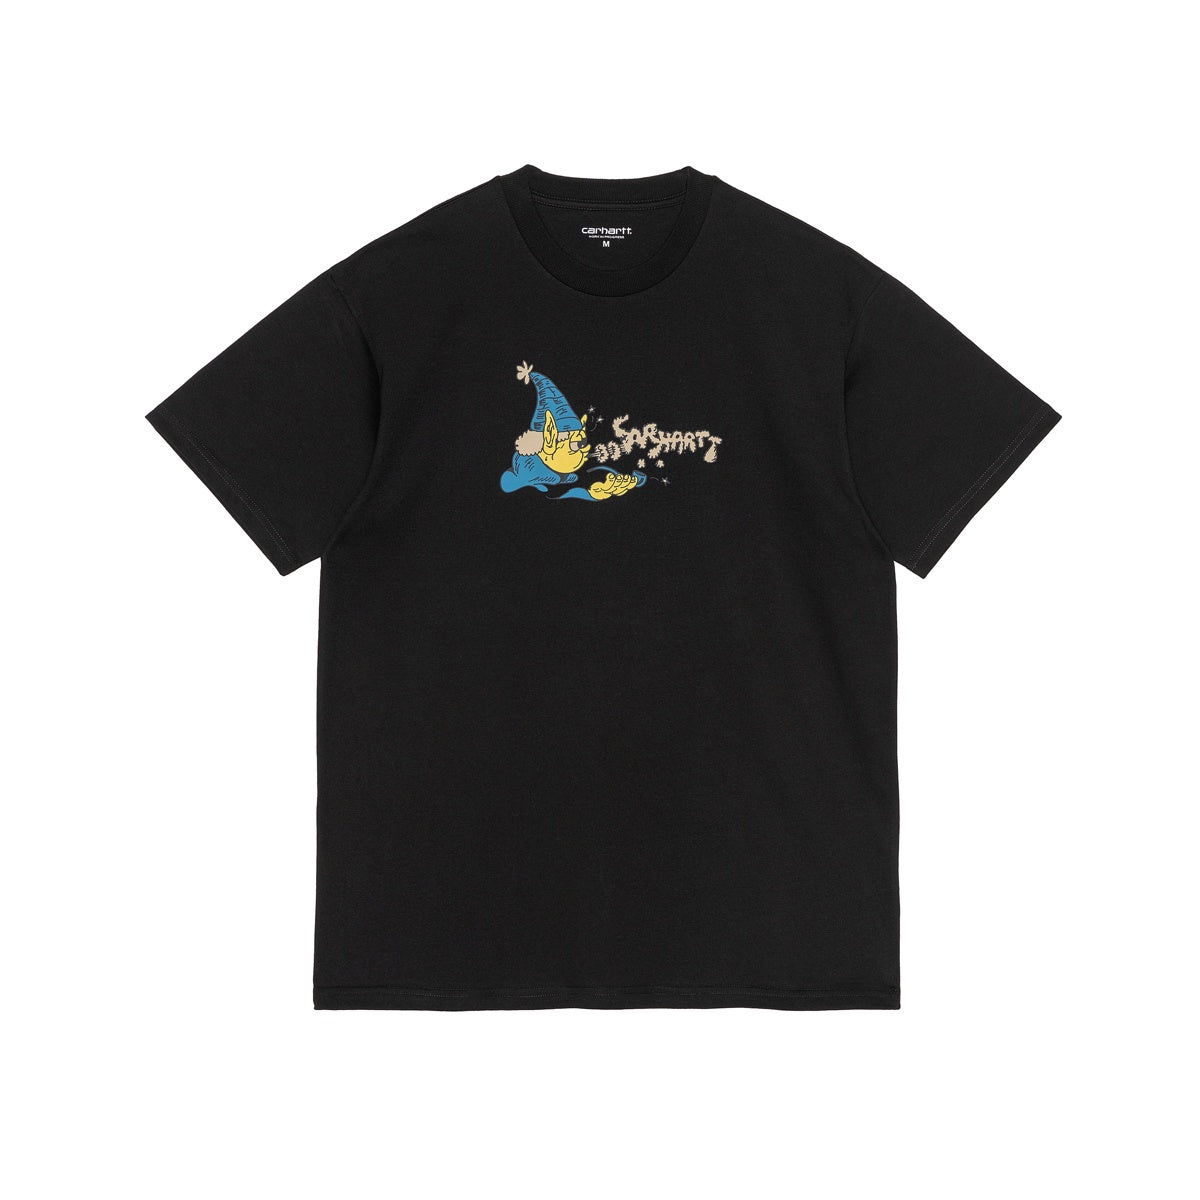 Carhartt WIP S/S KOGANKULT Wizard T-Shirt Black